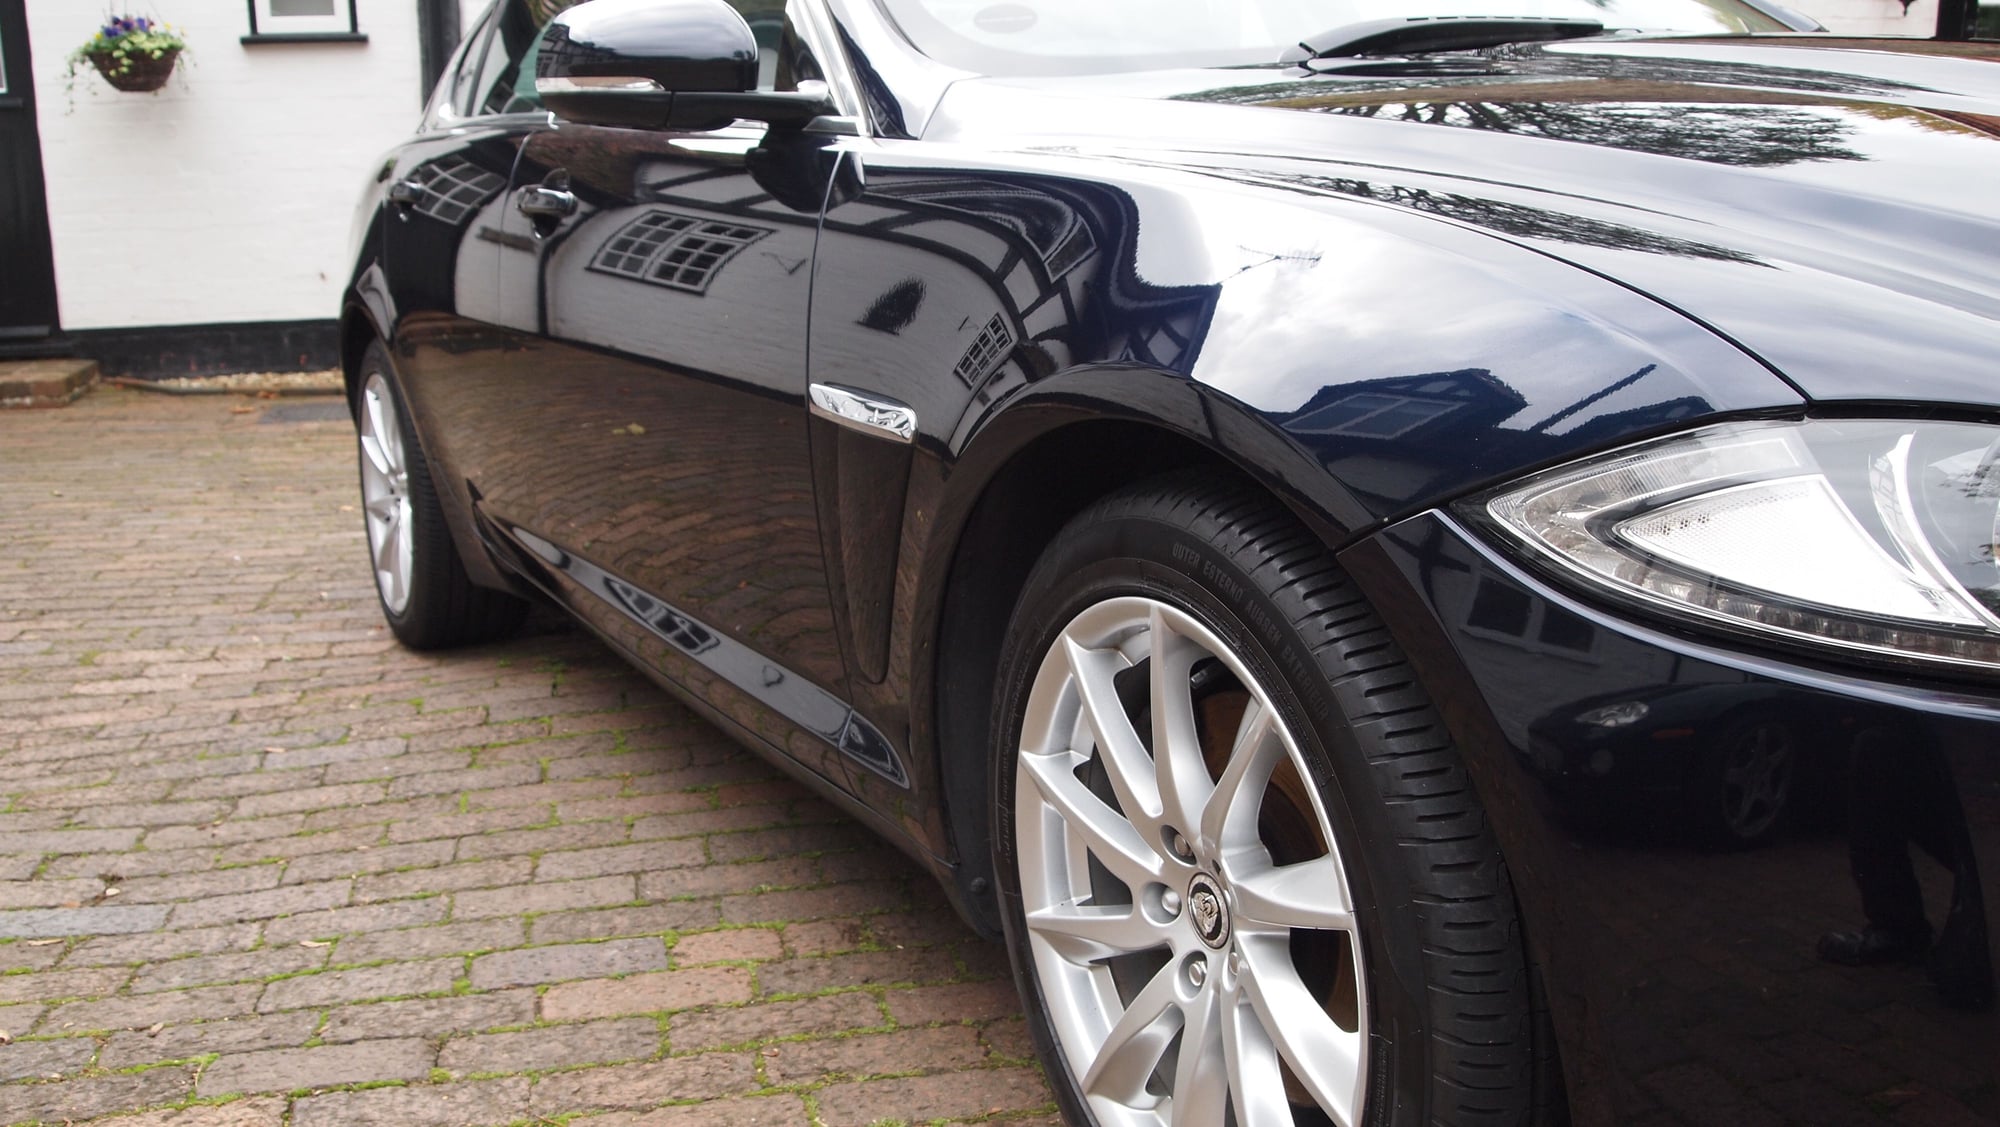 2011 Jaguar XF - Excellent condition, XF 2.2 Diesel Premium Luxury, Azurite blue 129,500 miles - UK - Used - VIN SAJEA71CX4SG01595 - Kidderminster DY11, United Kingdom